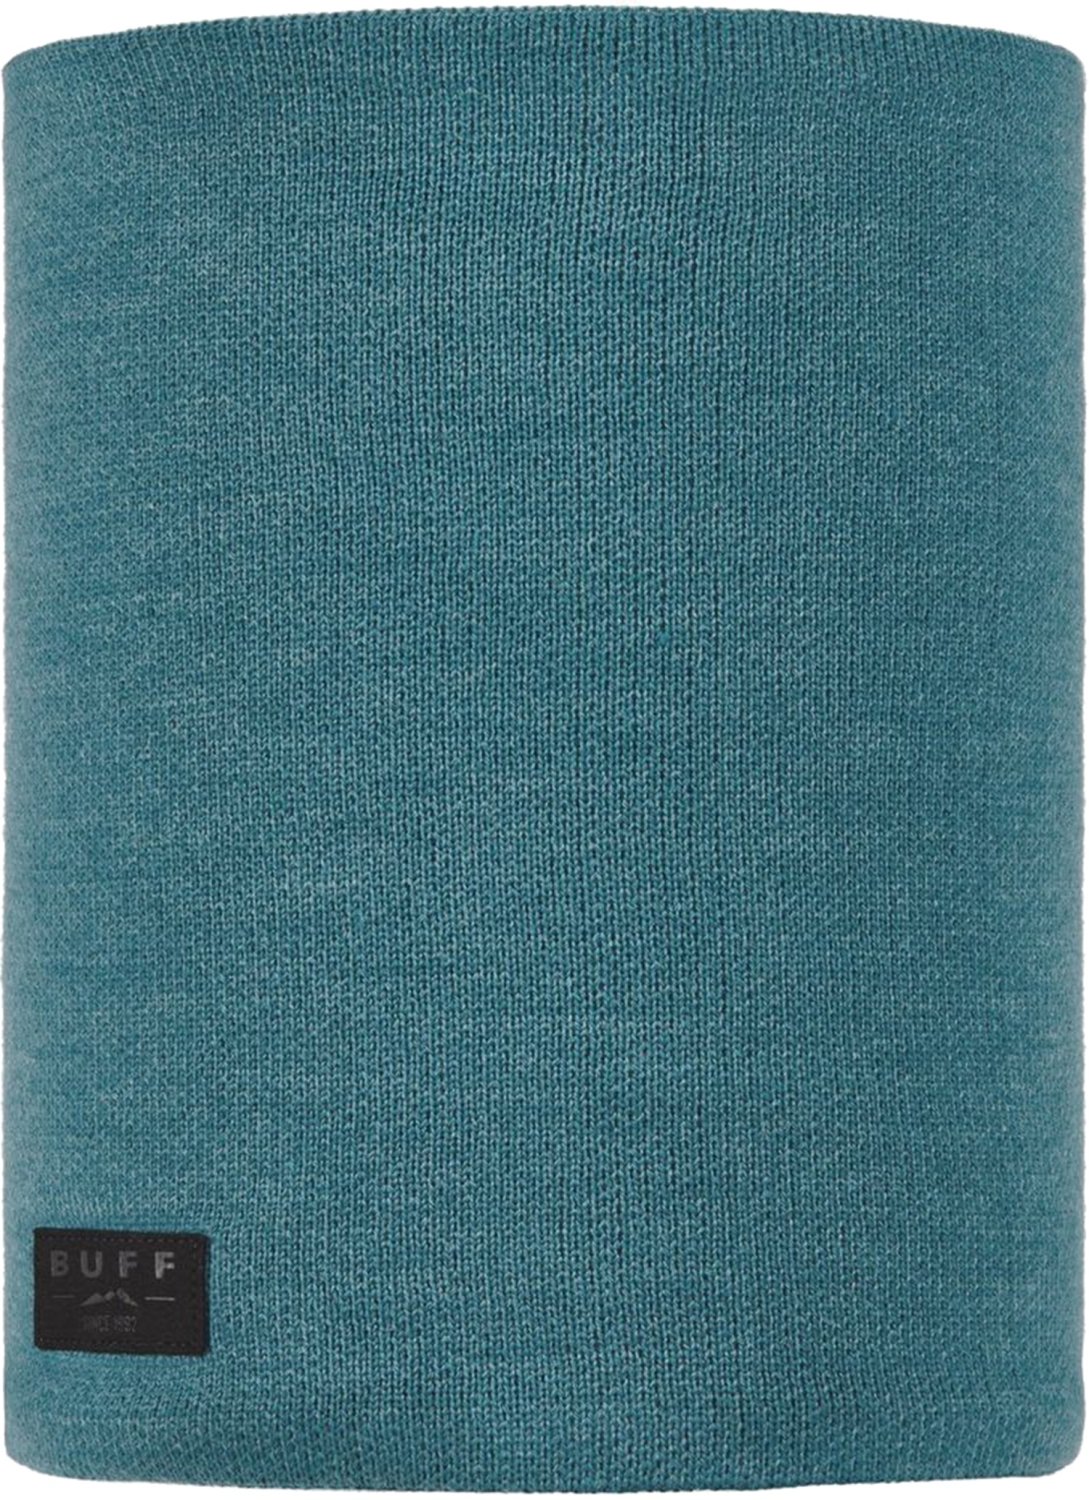 Шарф Buff Knitted & Fleece Neckwarmer Vaed Dusty Blue, US:one size, 129620.742.10.00 велобандана buff tech fleece neckwarmer r nightblue 118102 779 10 00